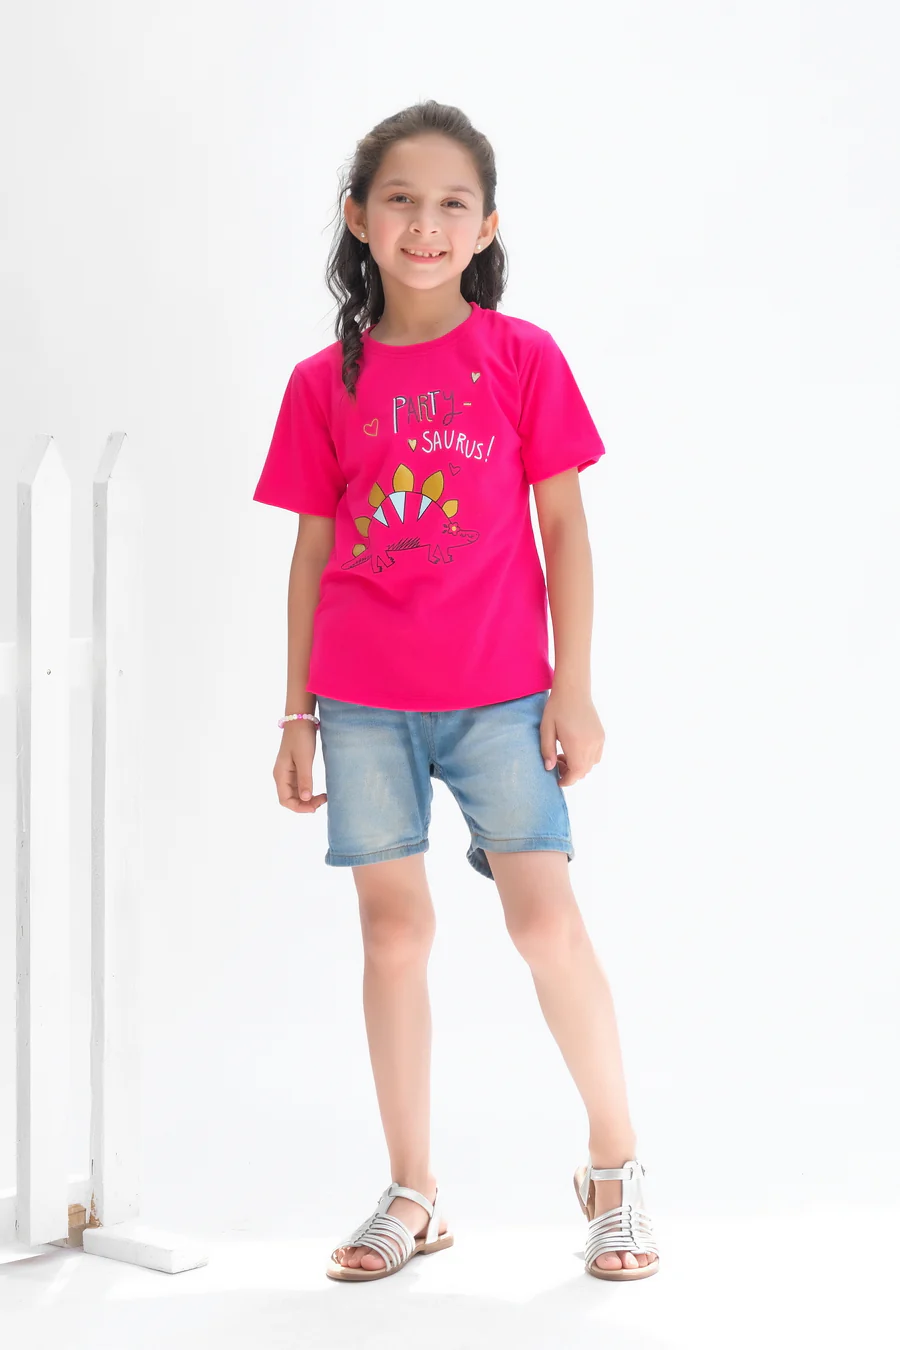 Party Saurus - Half Sleeves T-Shirts For Kids - Dark Pink